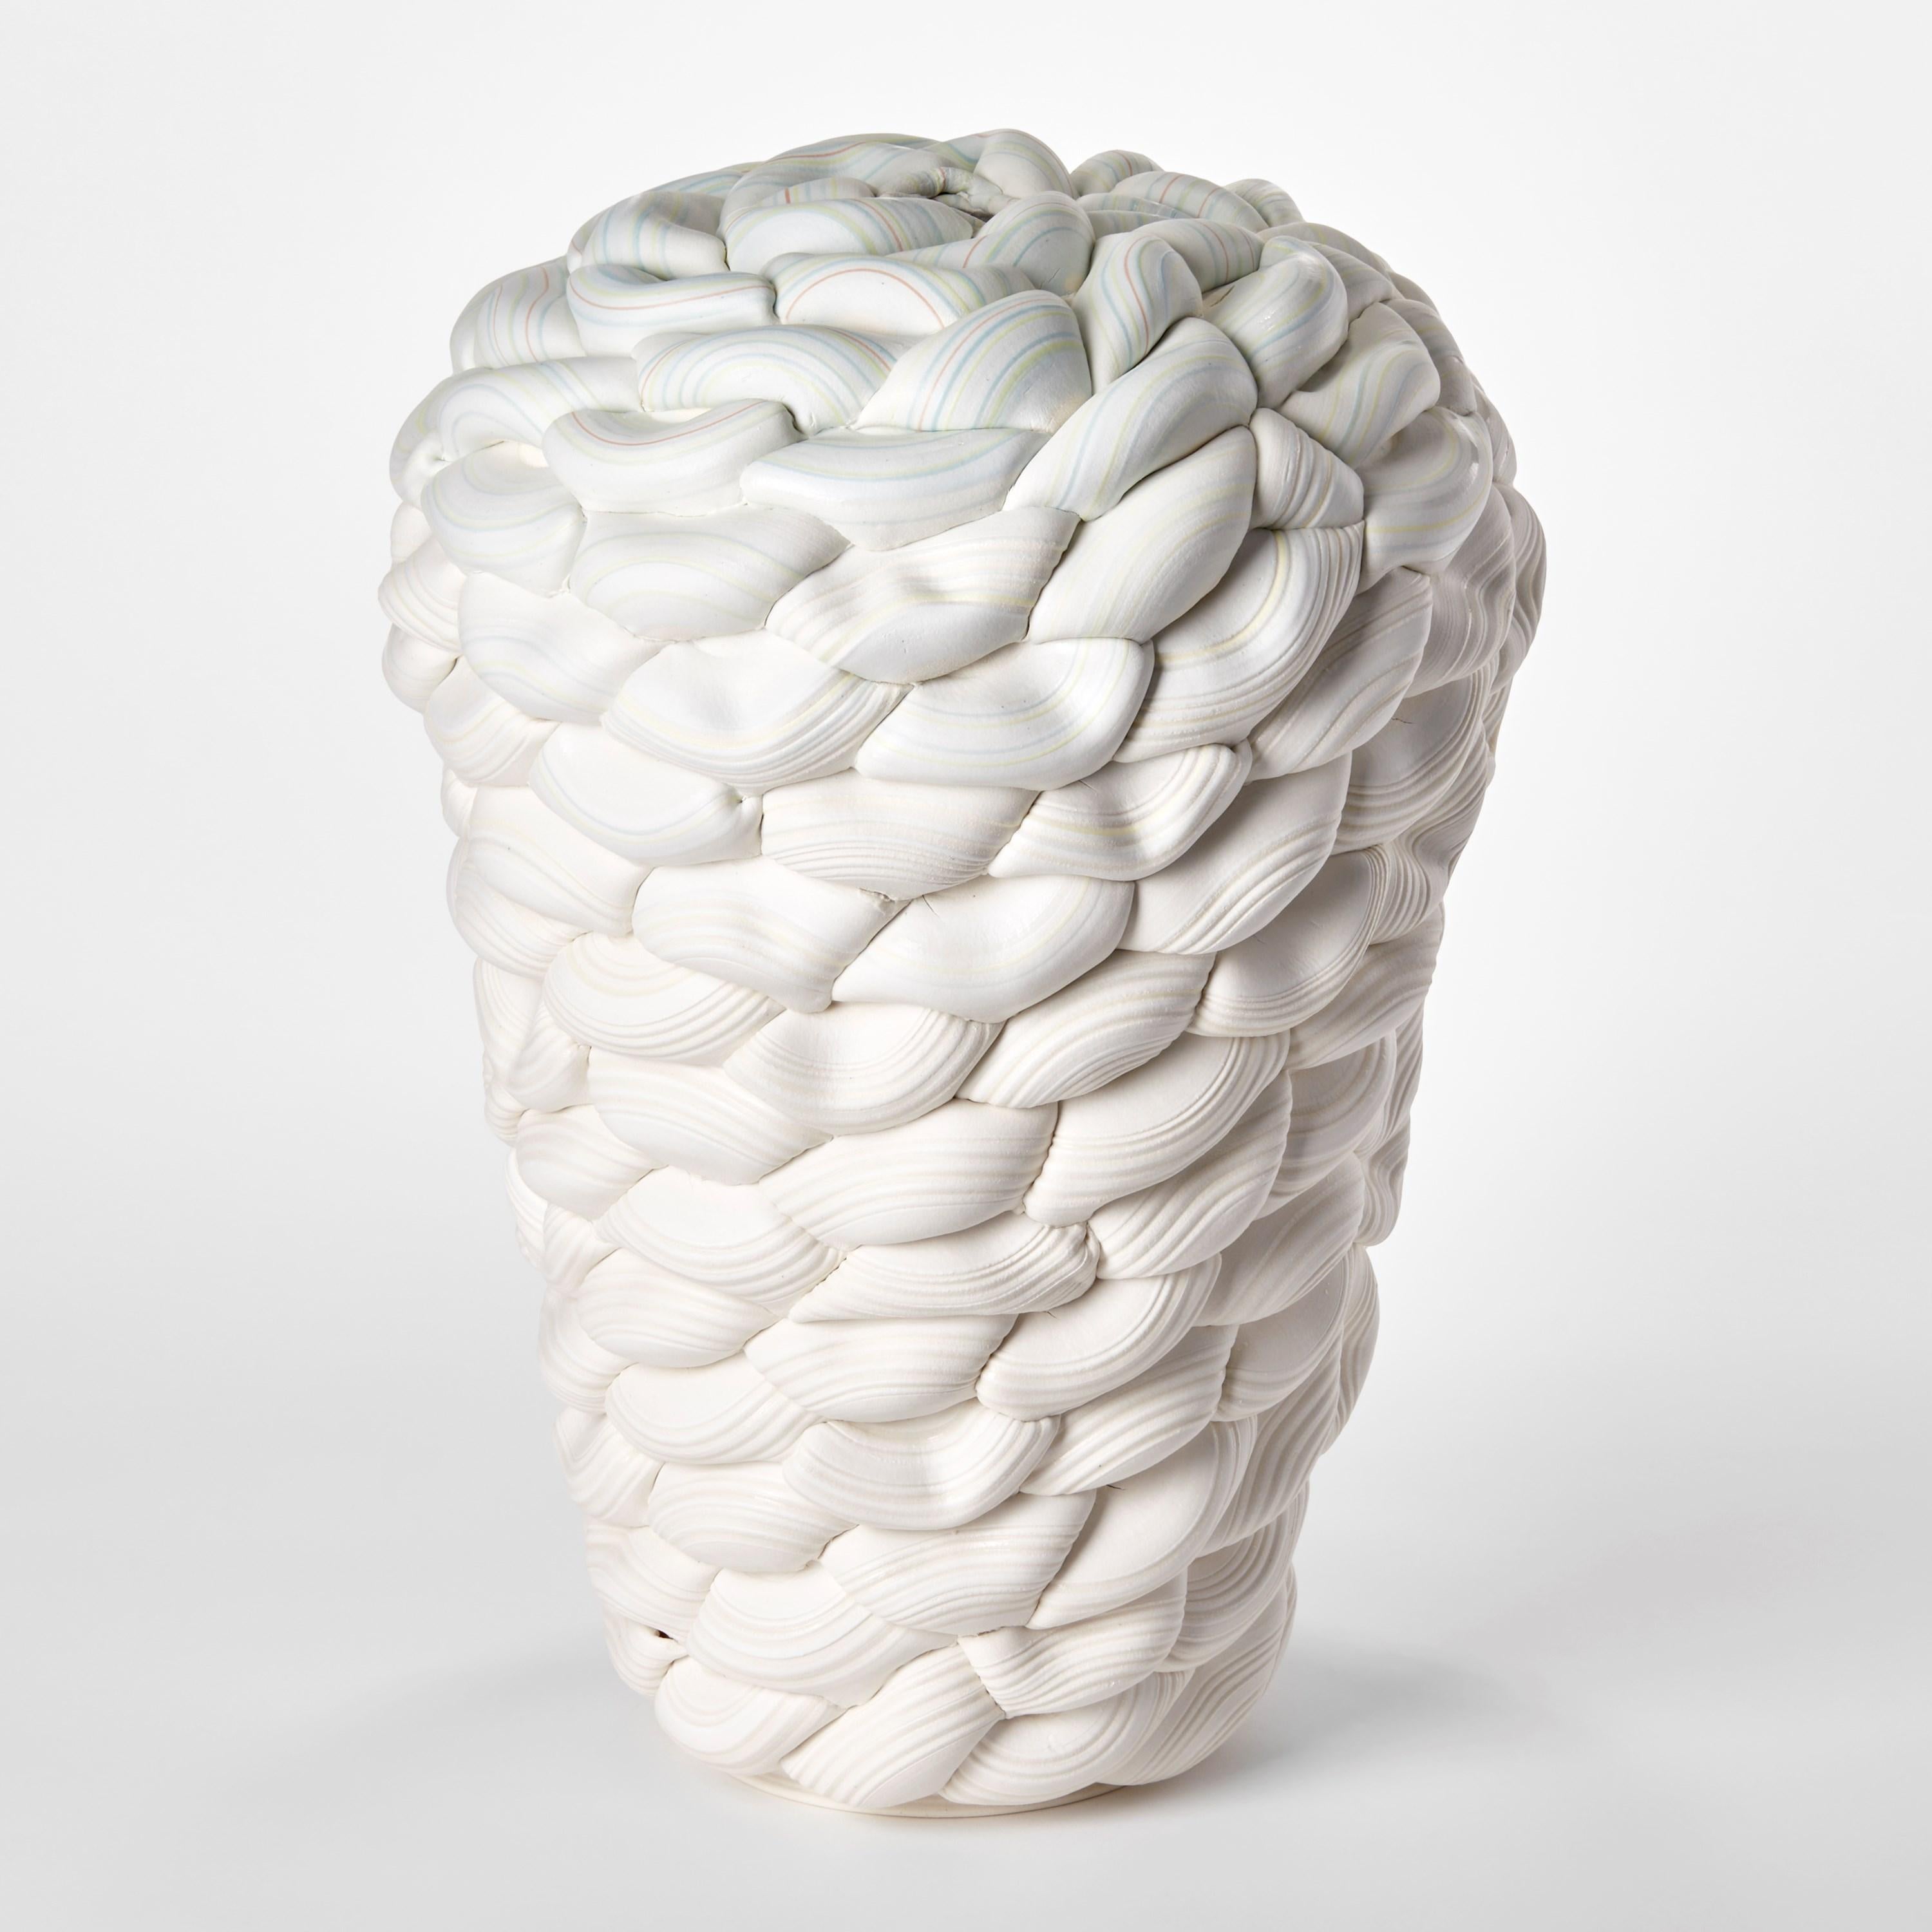 Hand-Crafted Striped Symmetry Fold V, white & aqua parian porcelain vessel by Steven Edwards For Sale